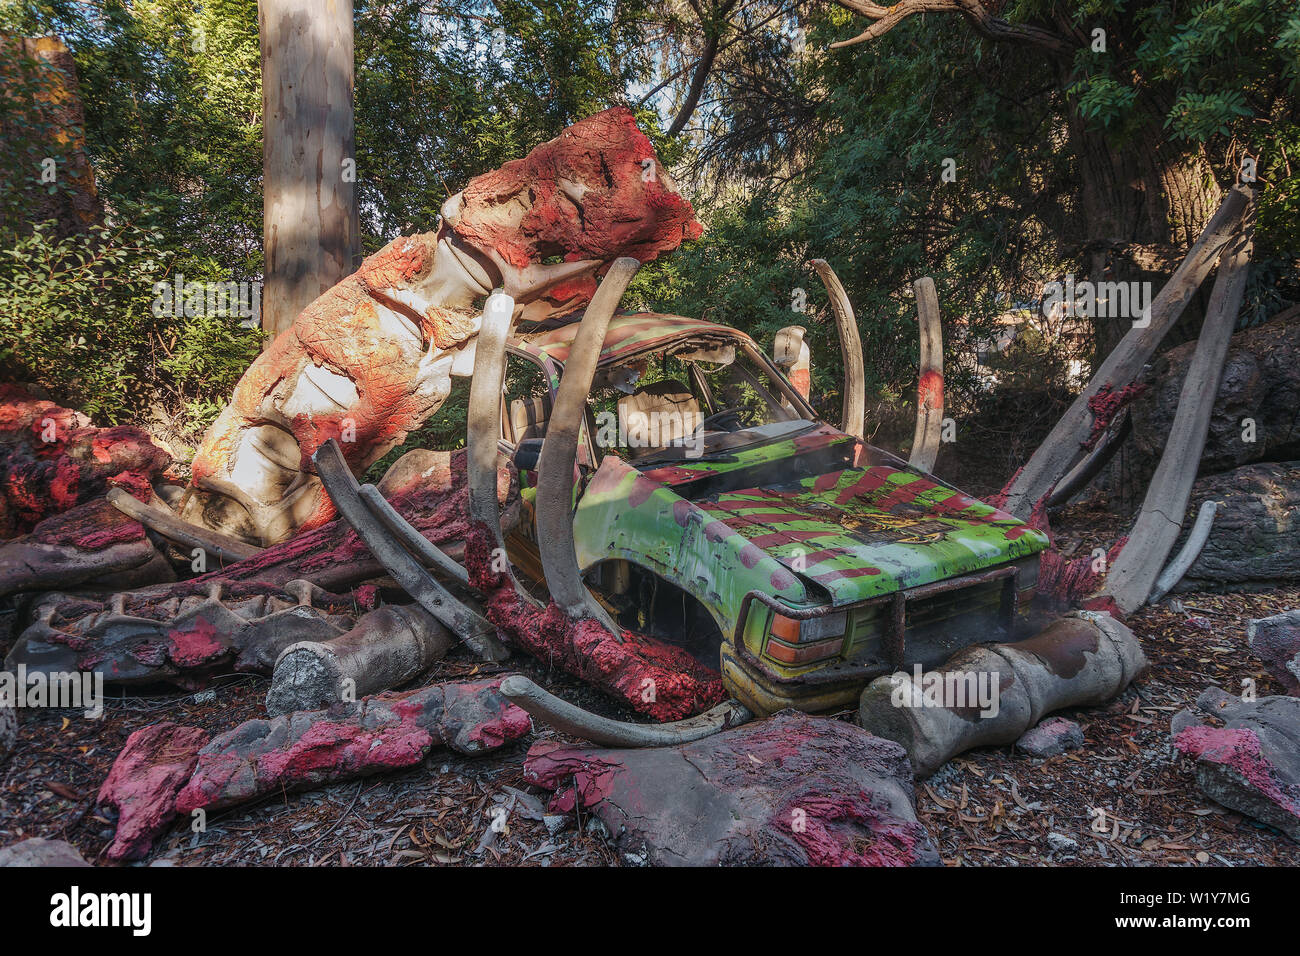 Szene aus dem Film Jurassic Park in den Universal Studios Hollywood angeordnet Stockfoto